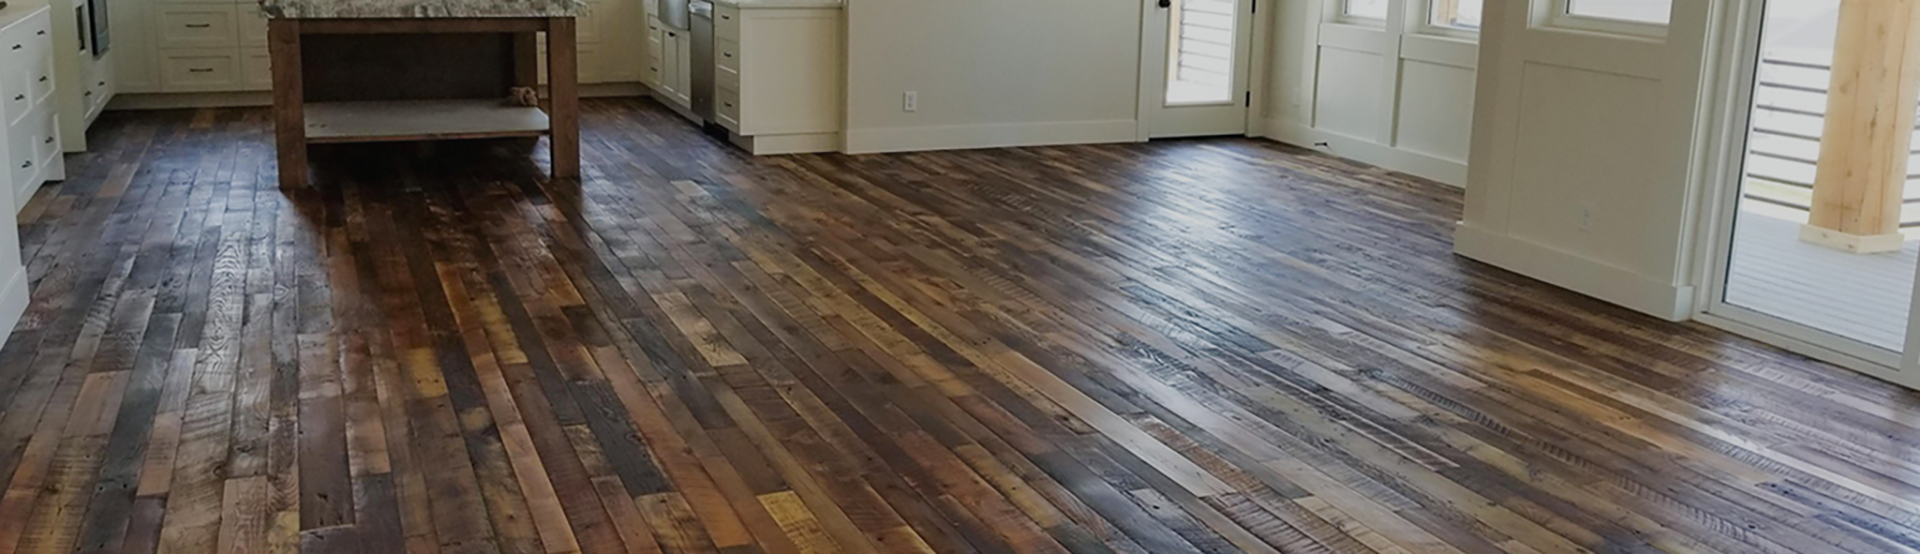 Radiant floor heat for hardwood floors